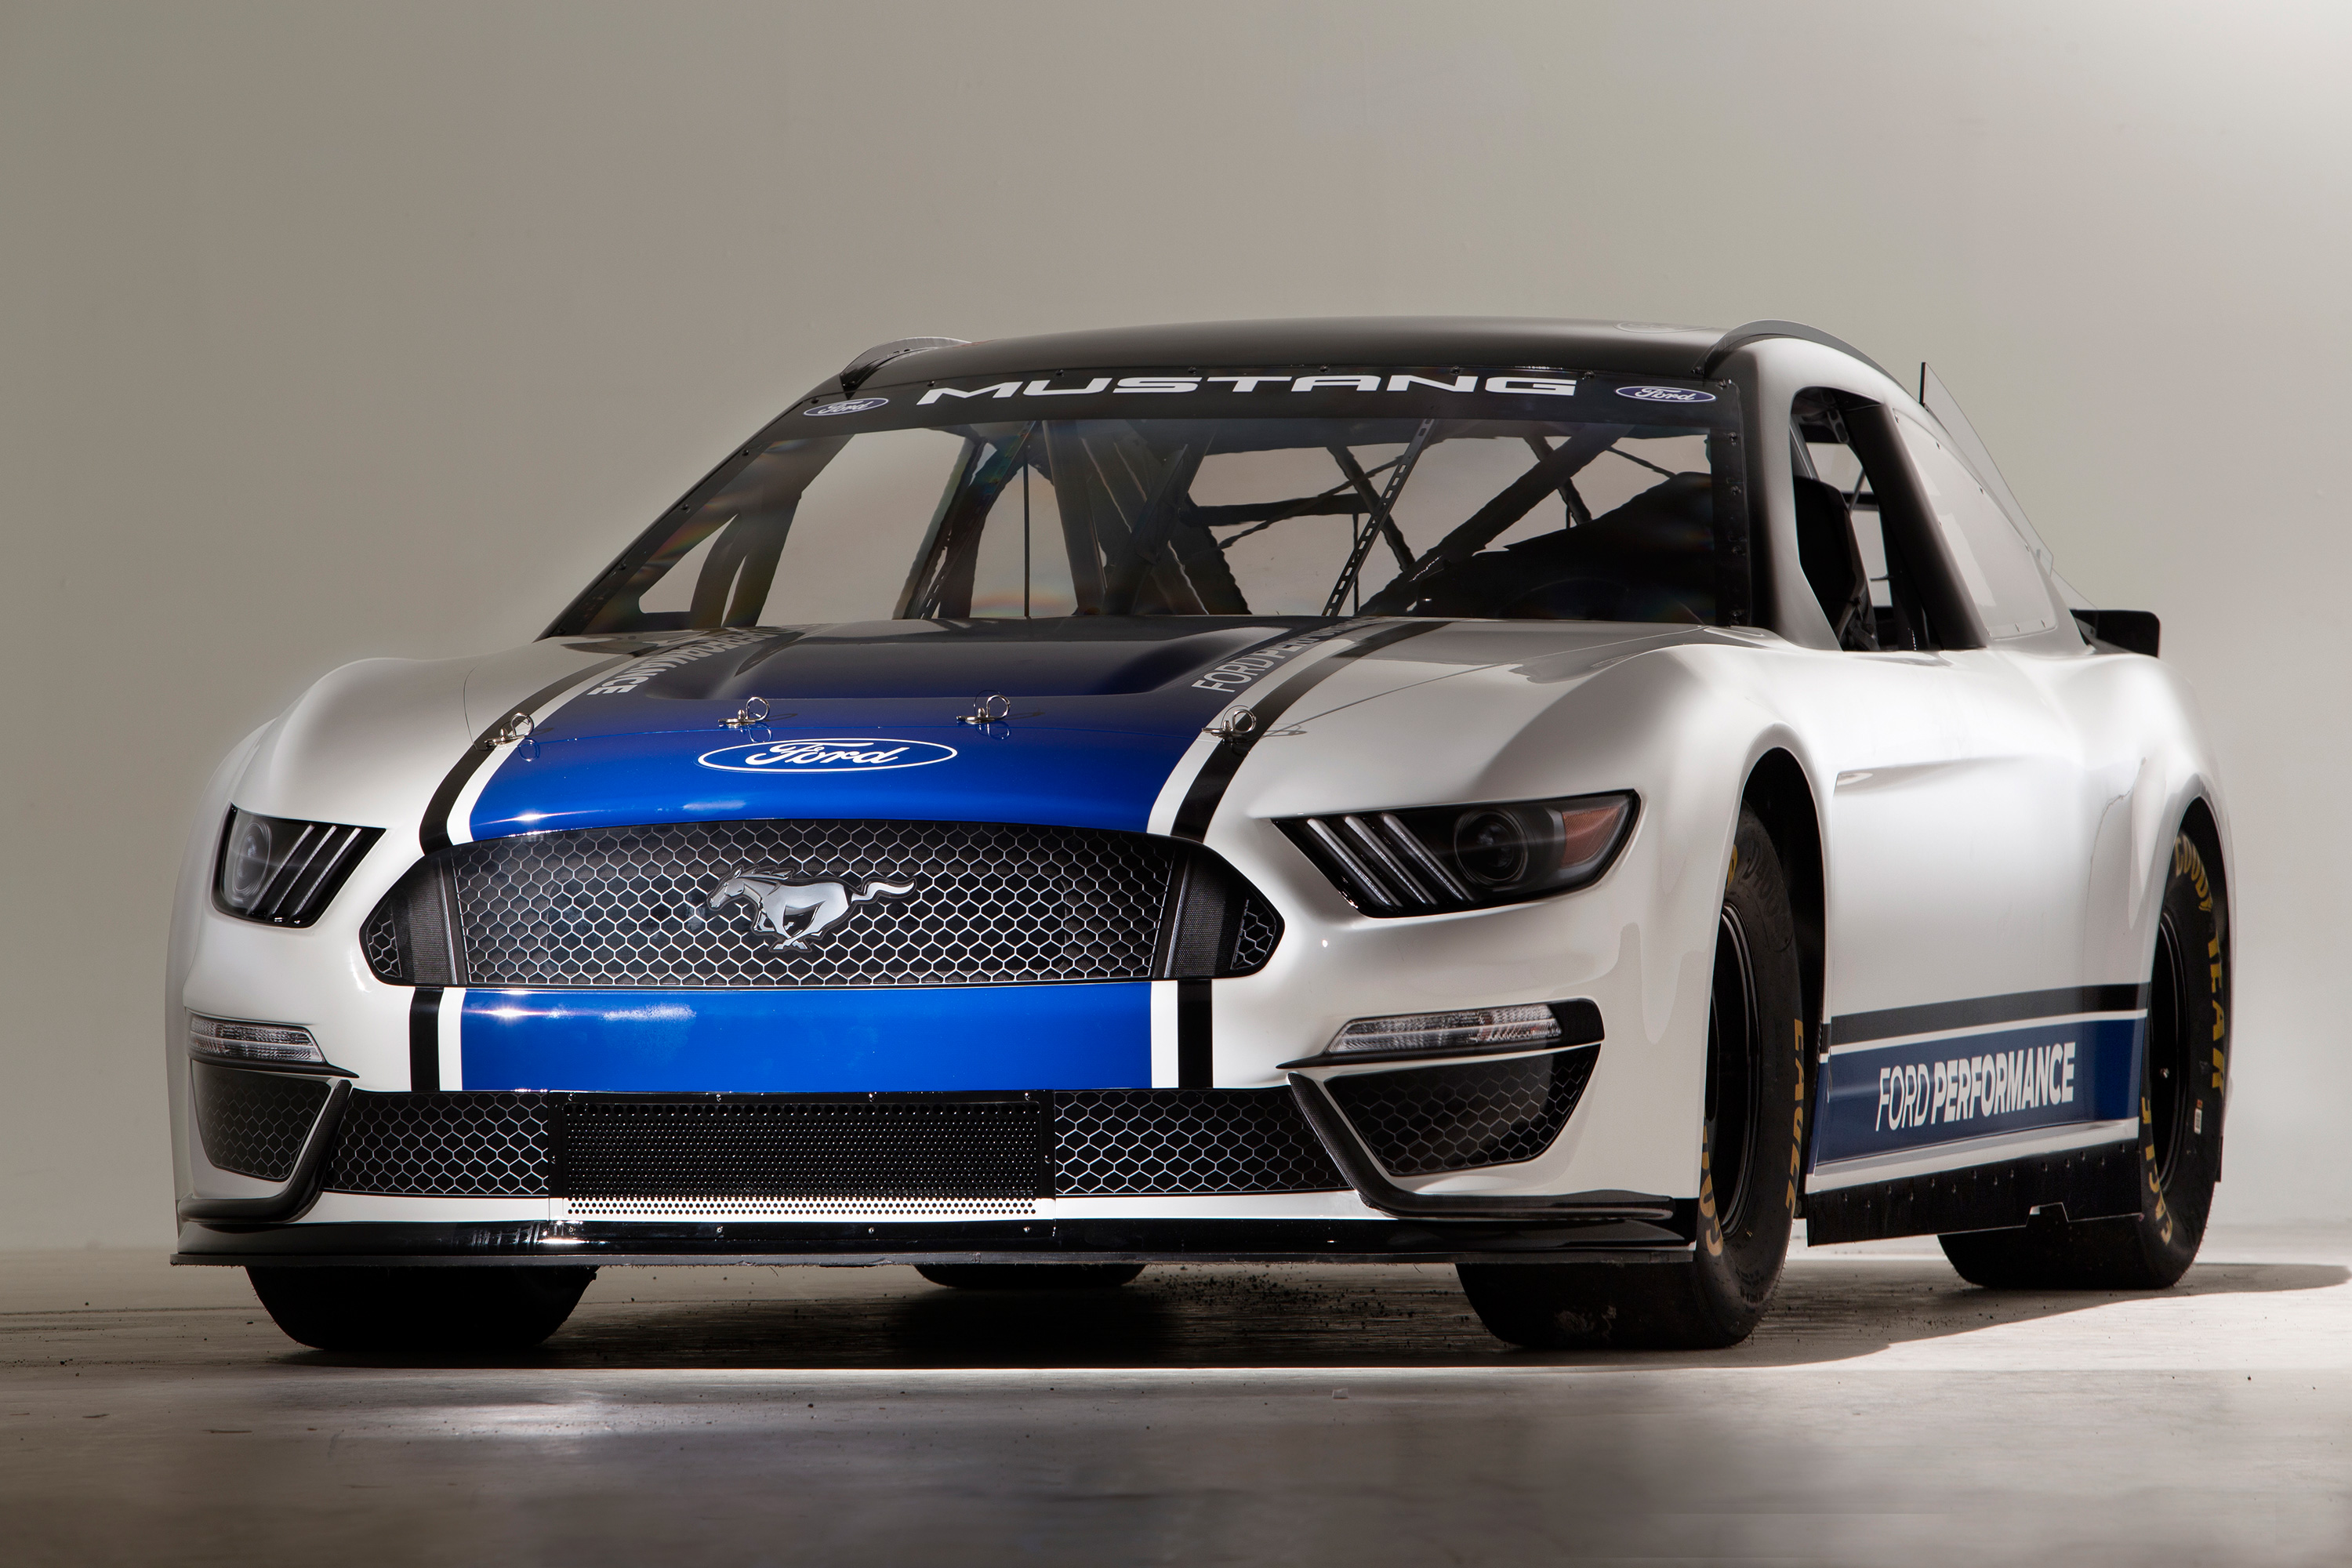 Ford NASCAR Mustang HD Cars, 4k Wallpaper, Image